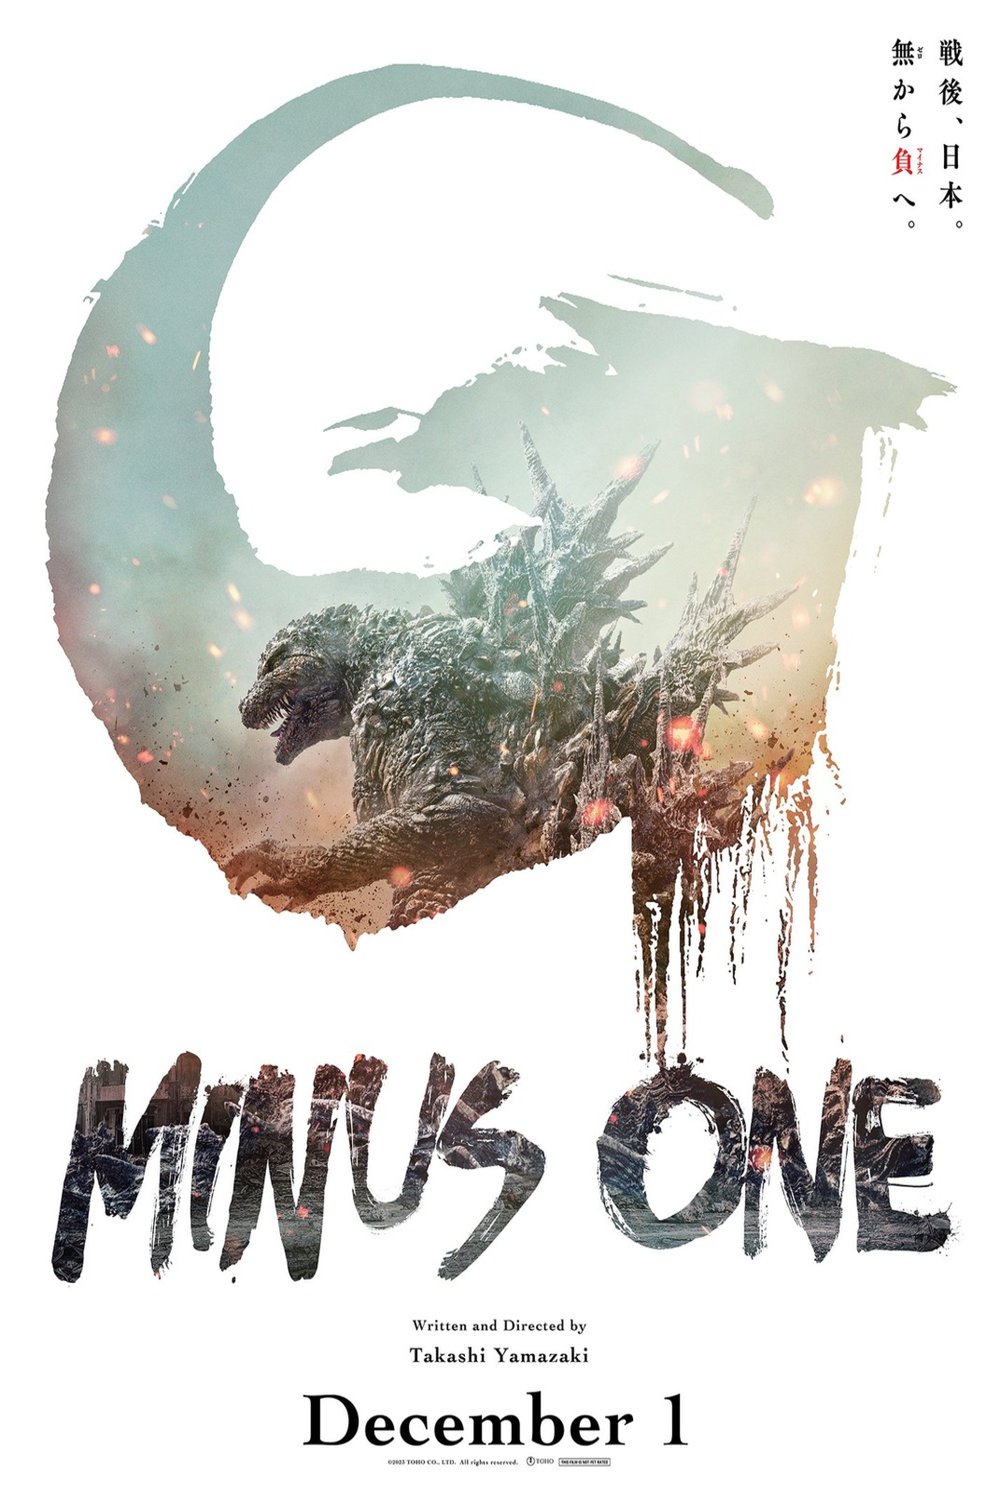 L'affiche du film Godzilla Minus One